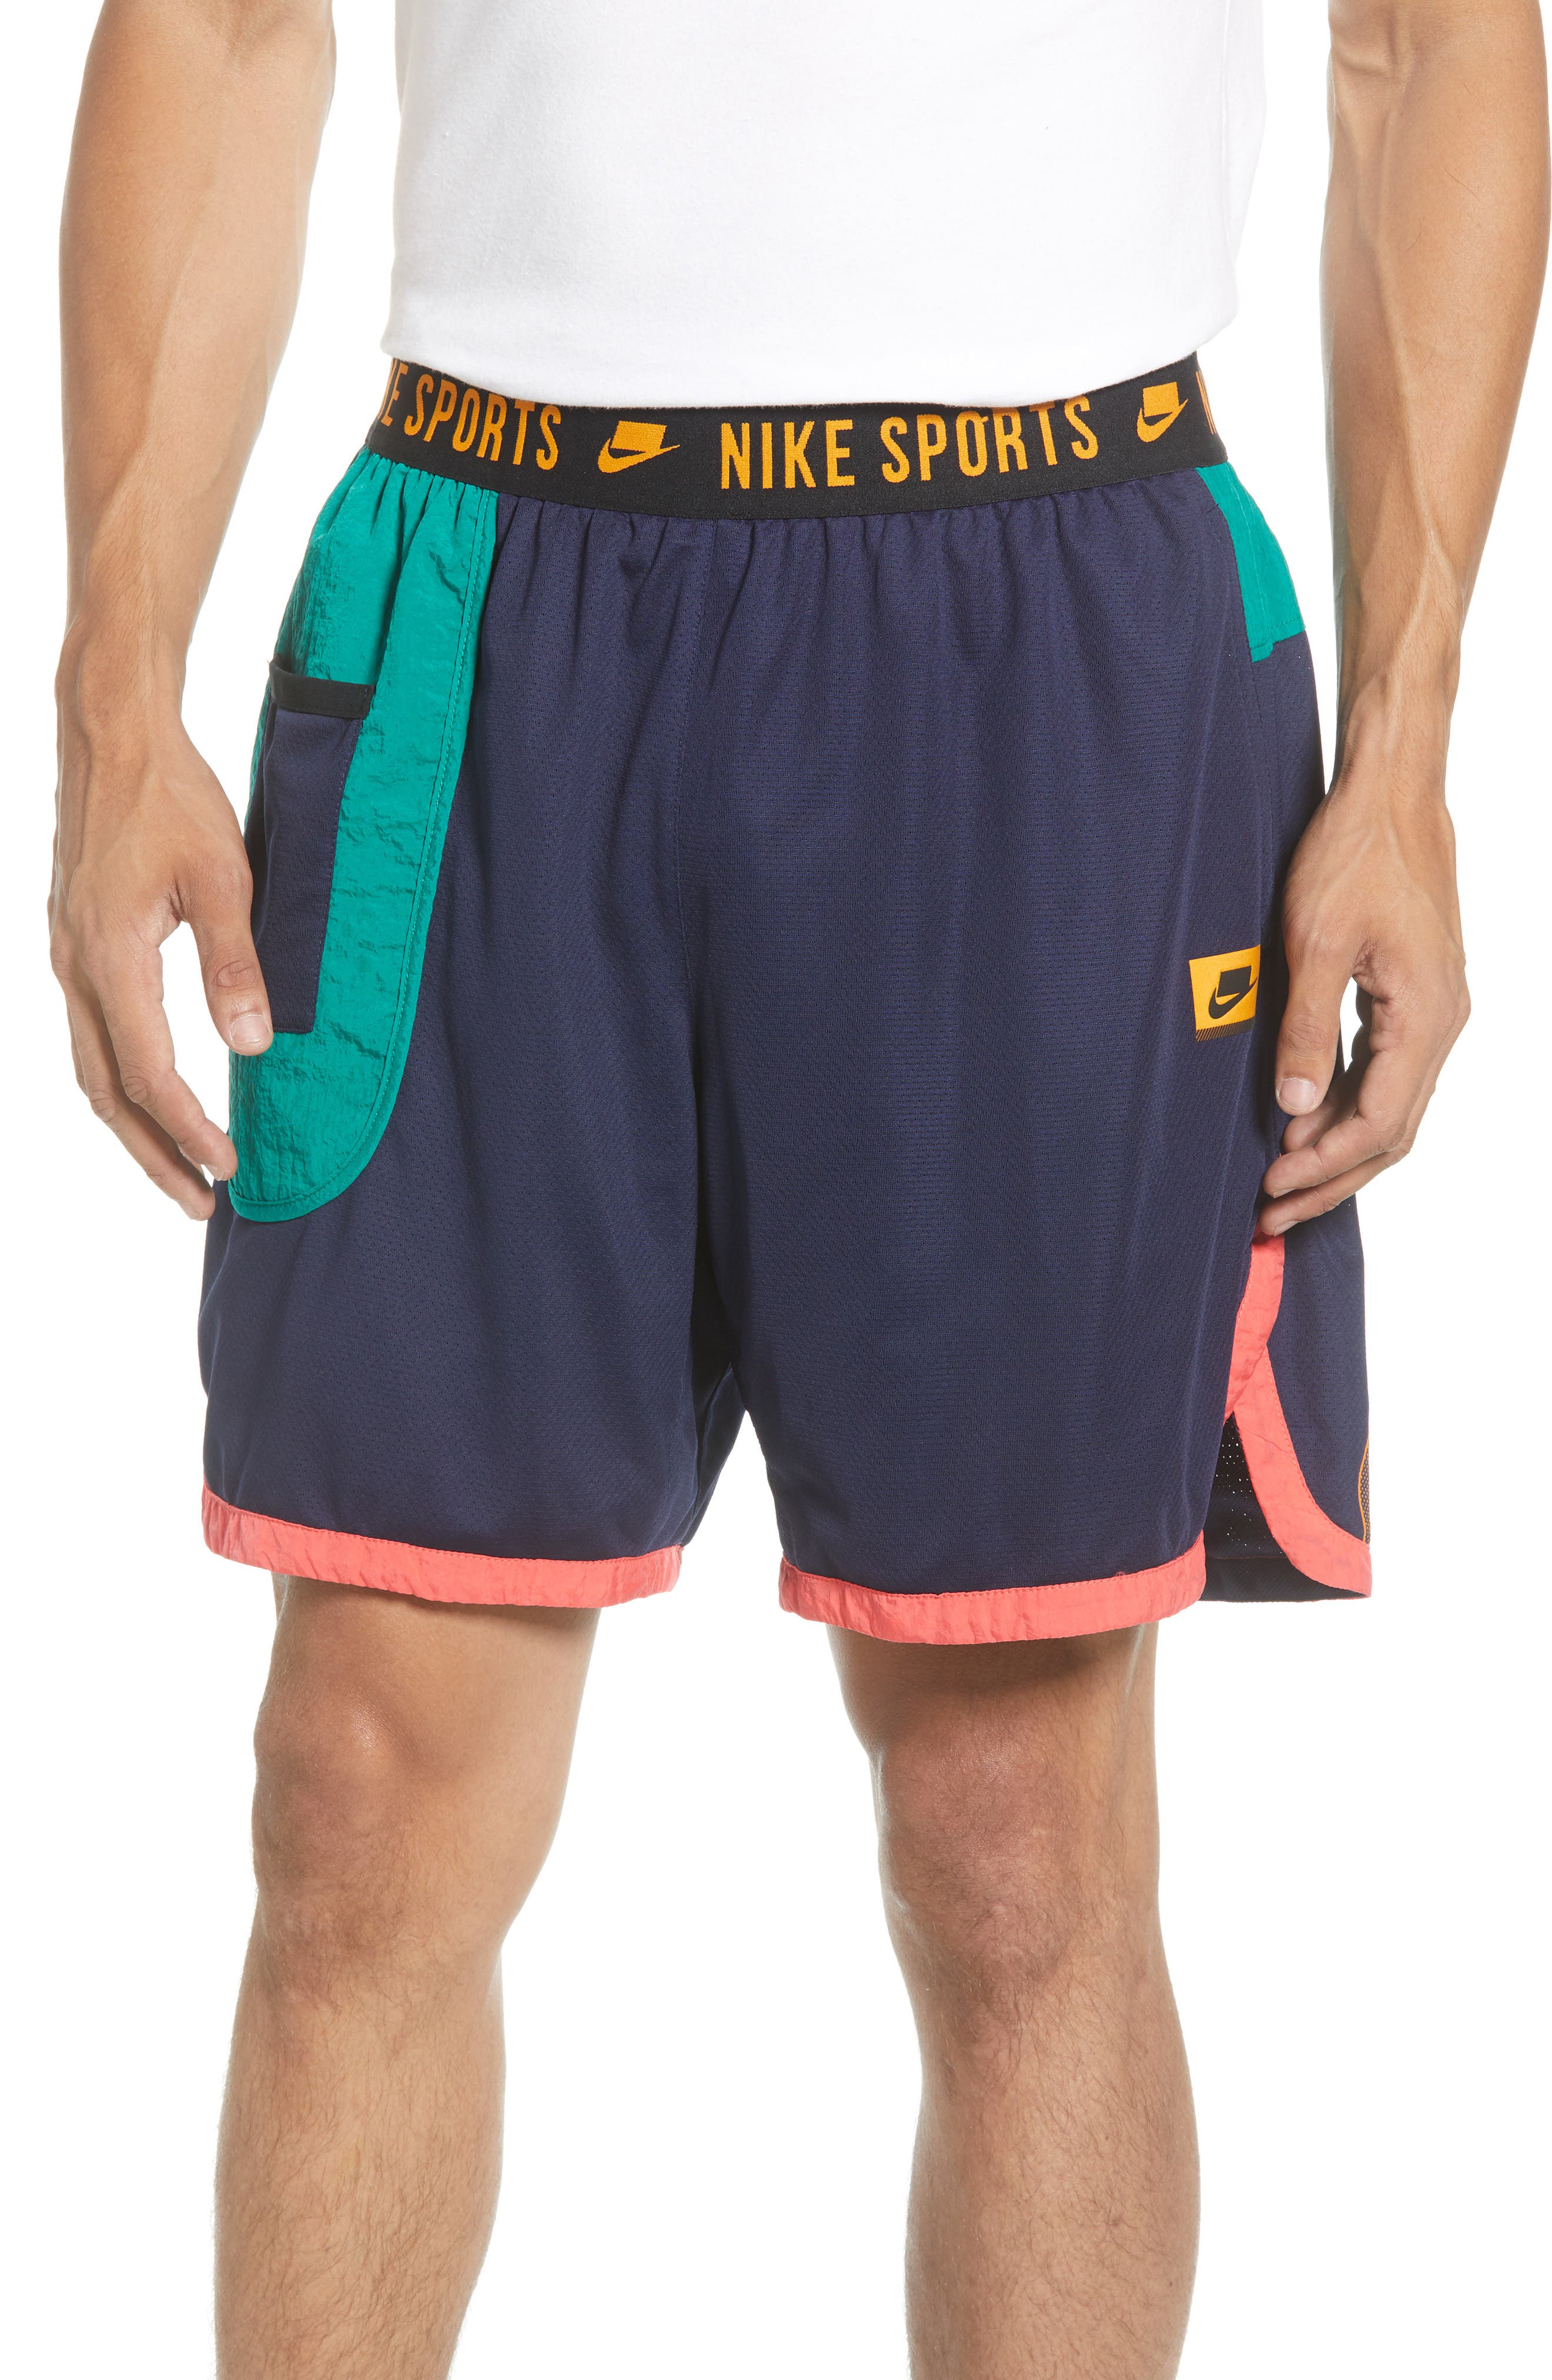 nike sports clash shorts